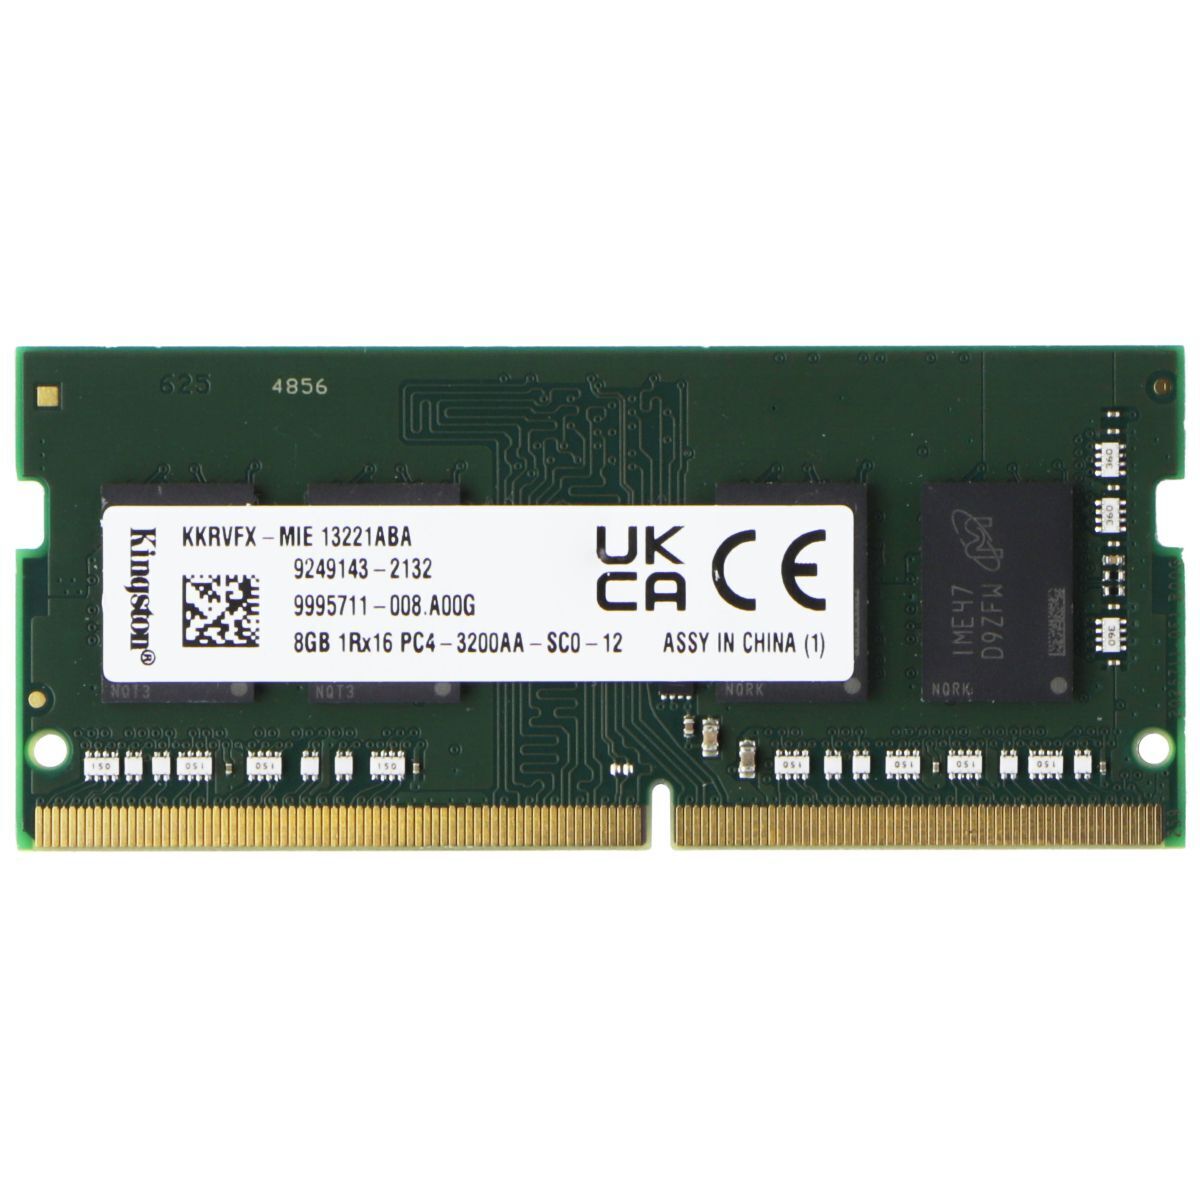 Kingston (8GB) DDR4 1Rx16 (PC4-3200AA) Laptop RAM Memory KKRVFX-MIE